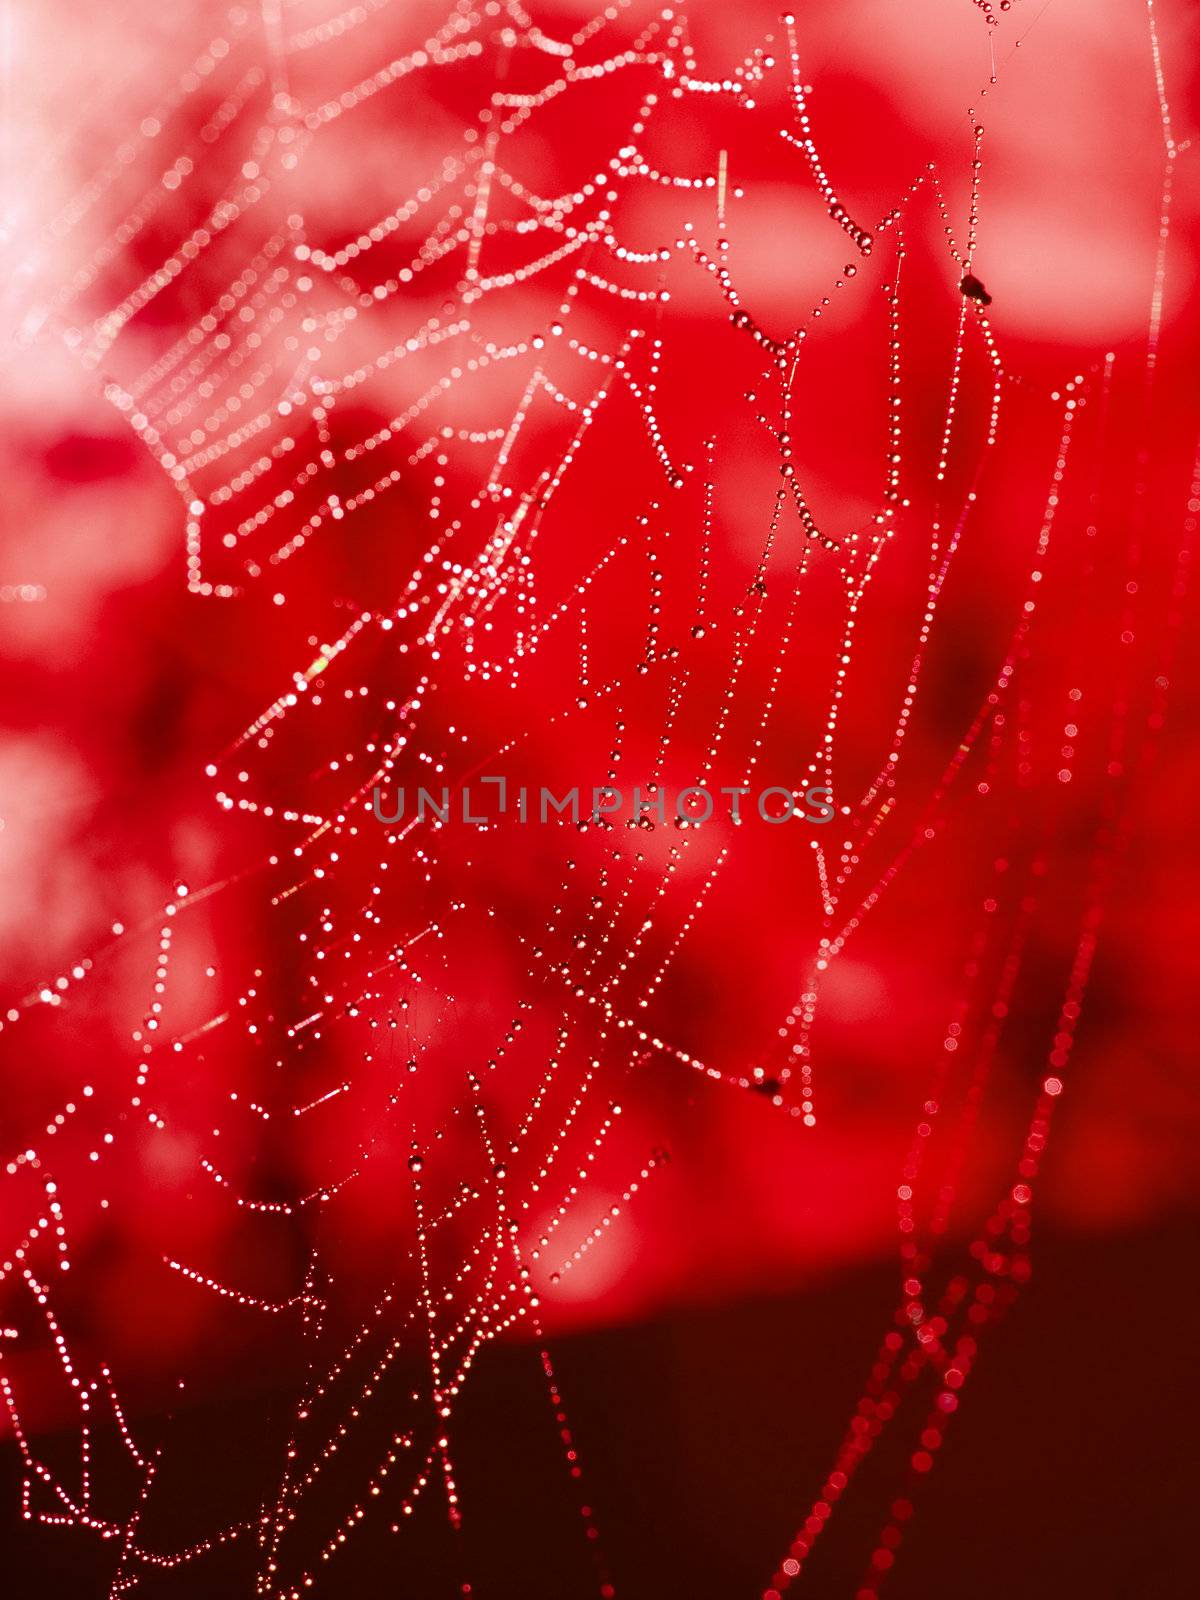 Redtoned Spider Web Covered with Sparkling Dew Drops by Frankljunior